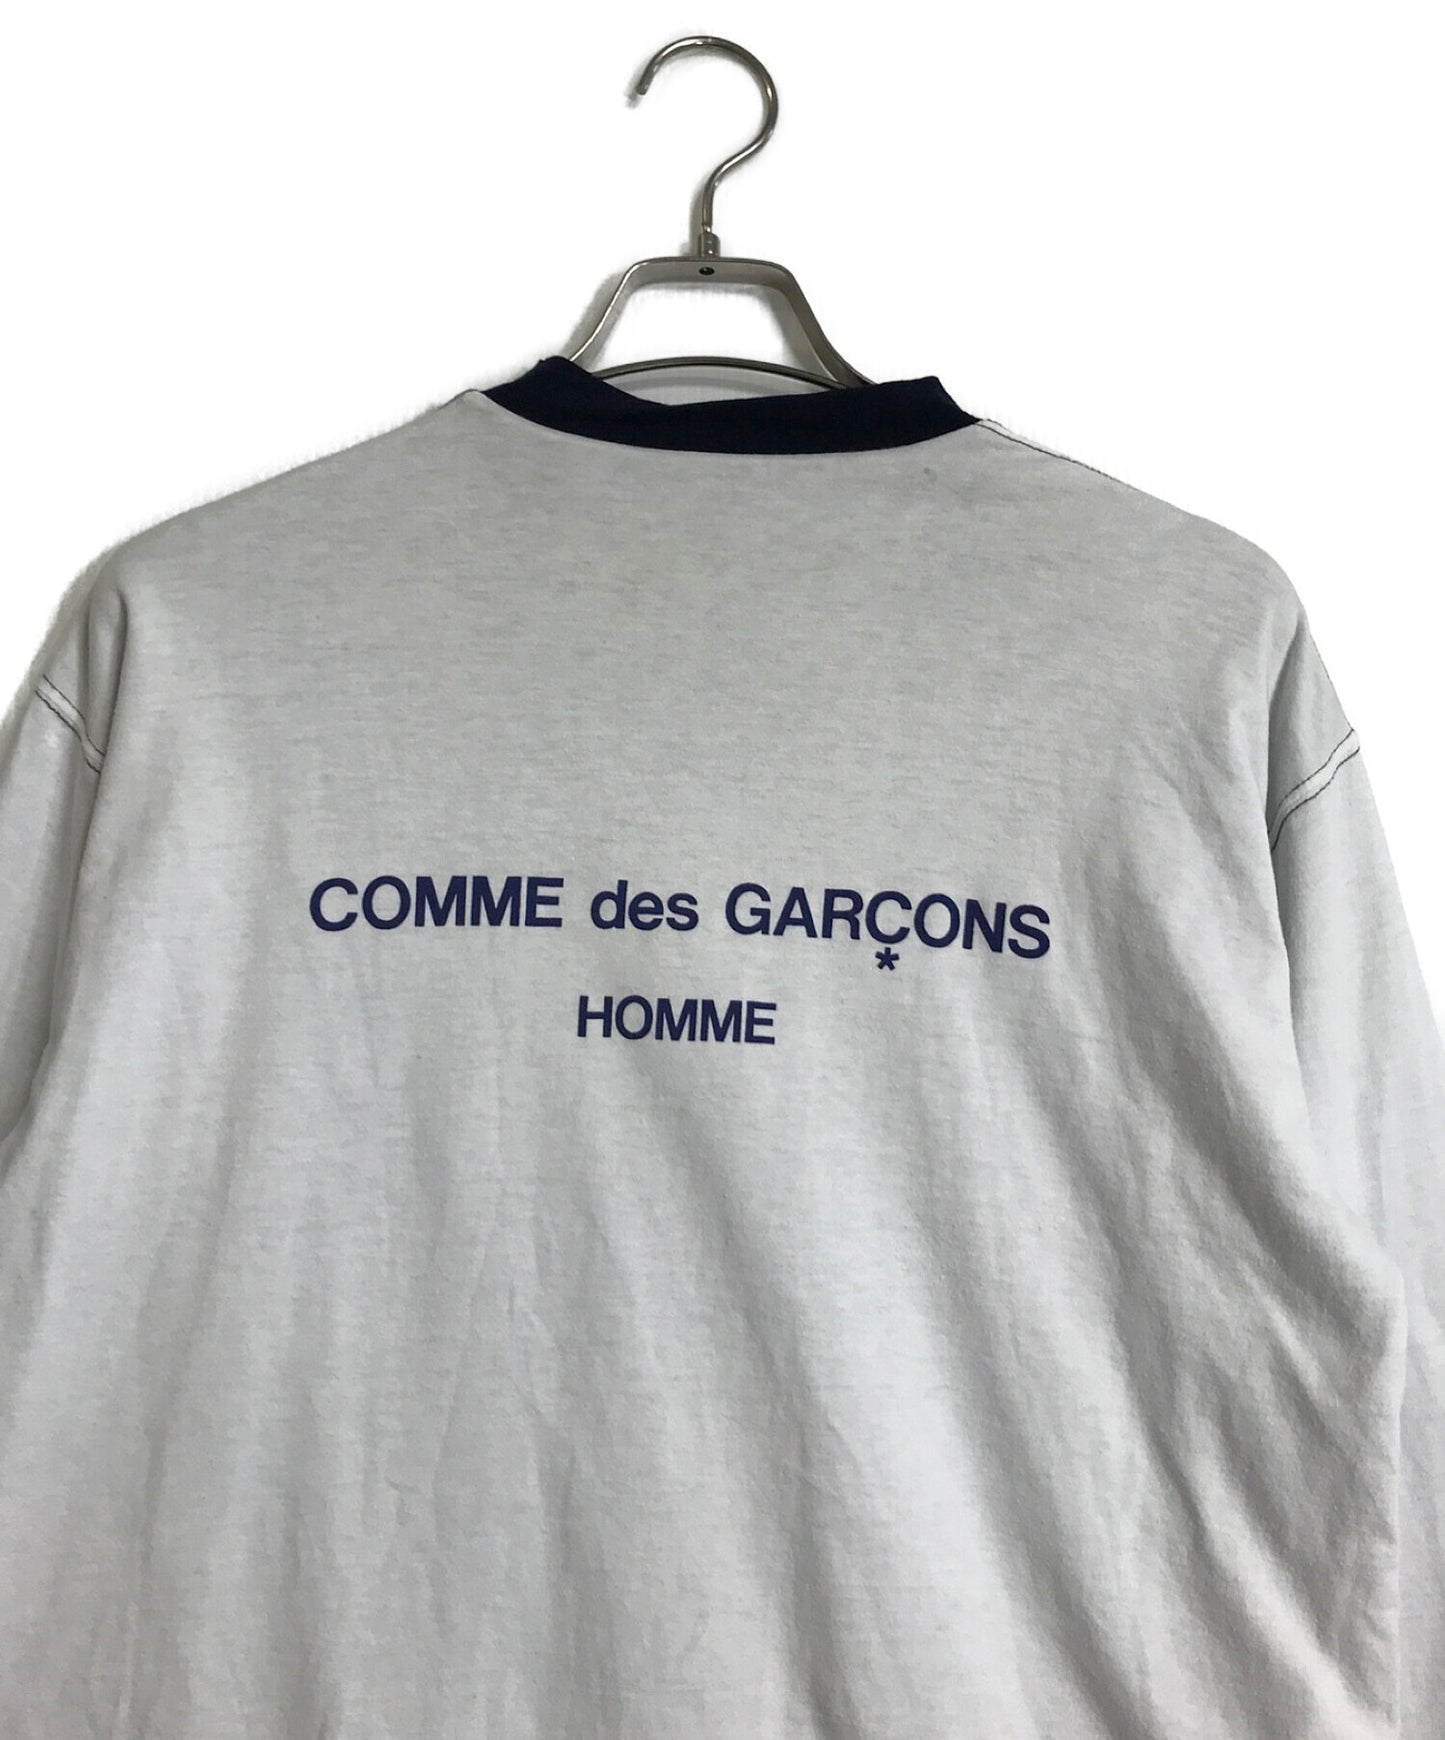 COMME DES GARCONS HOMME 90的可逆徽标编织切割和缝制ht-040280